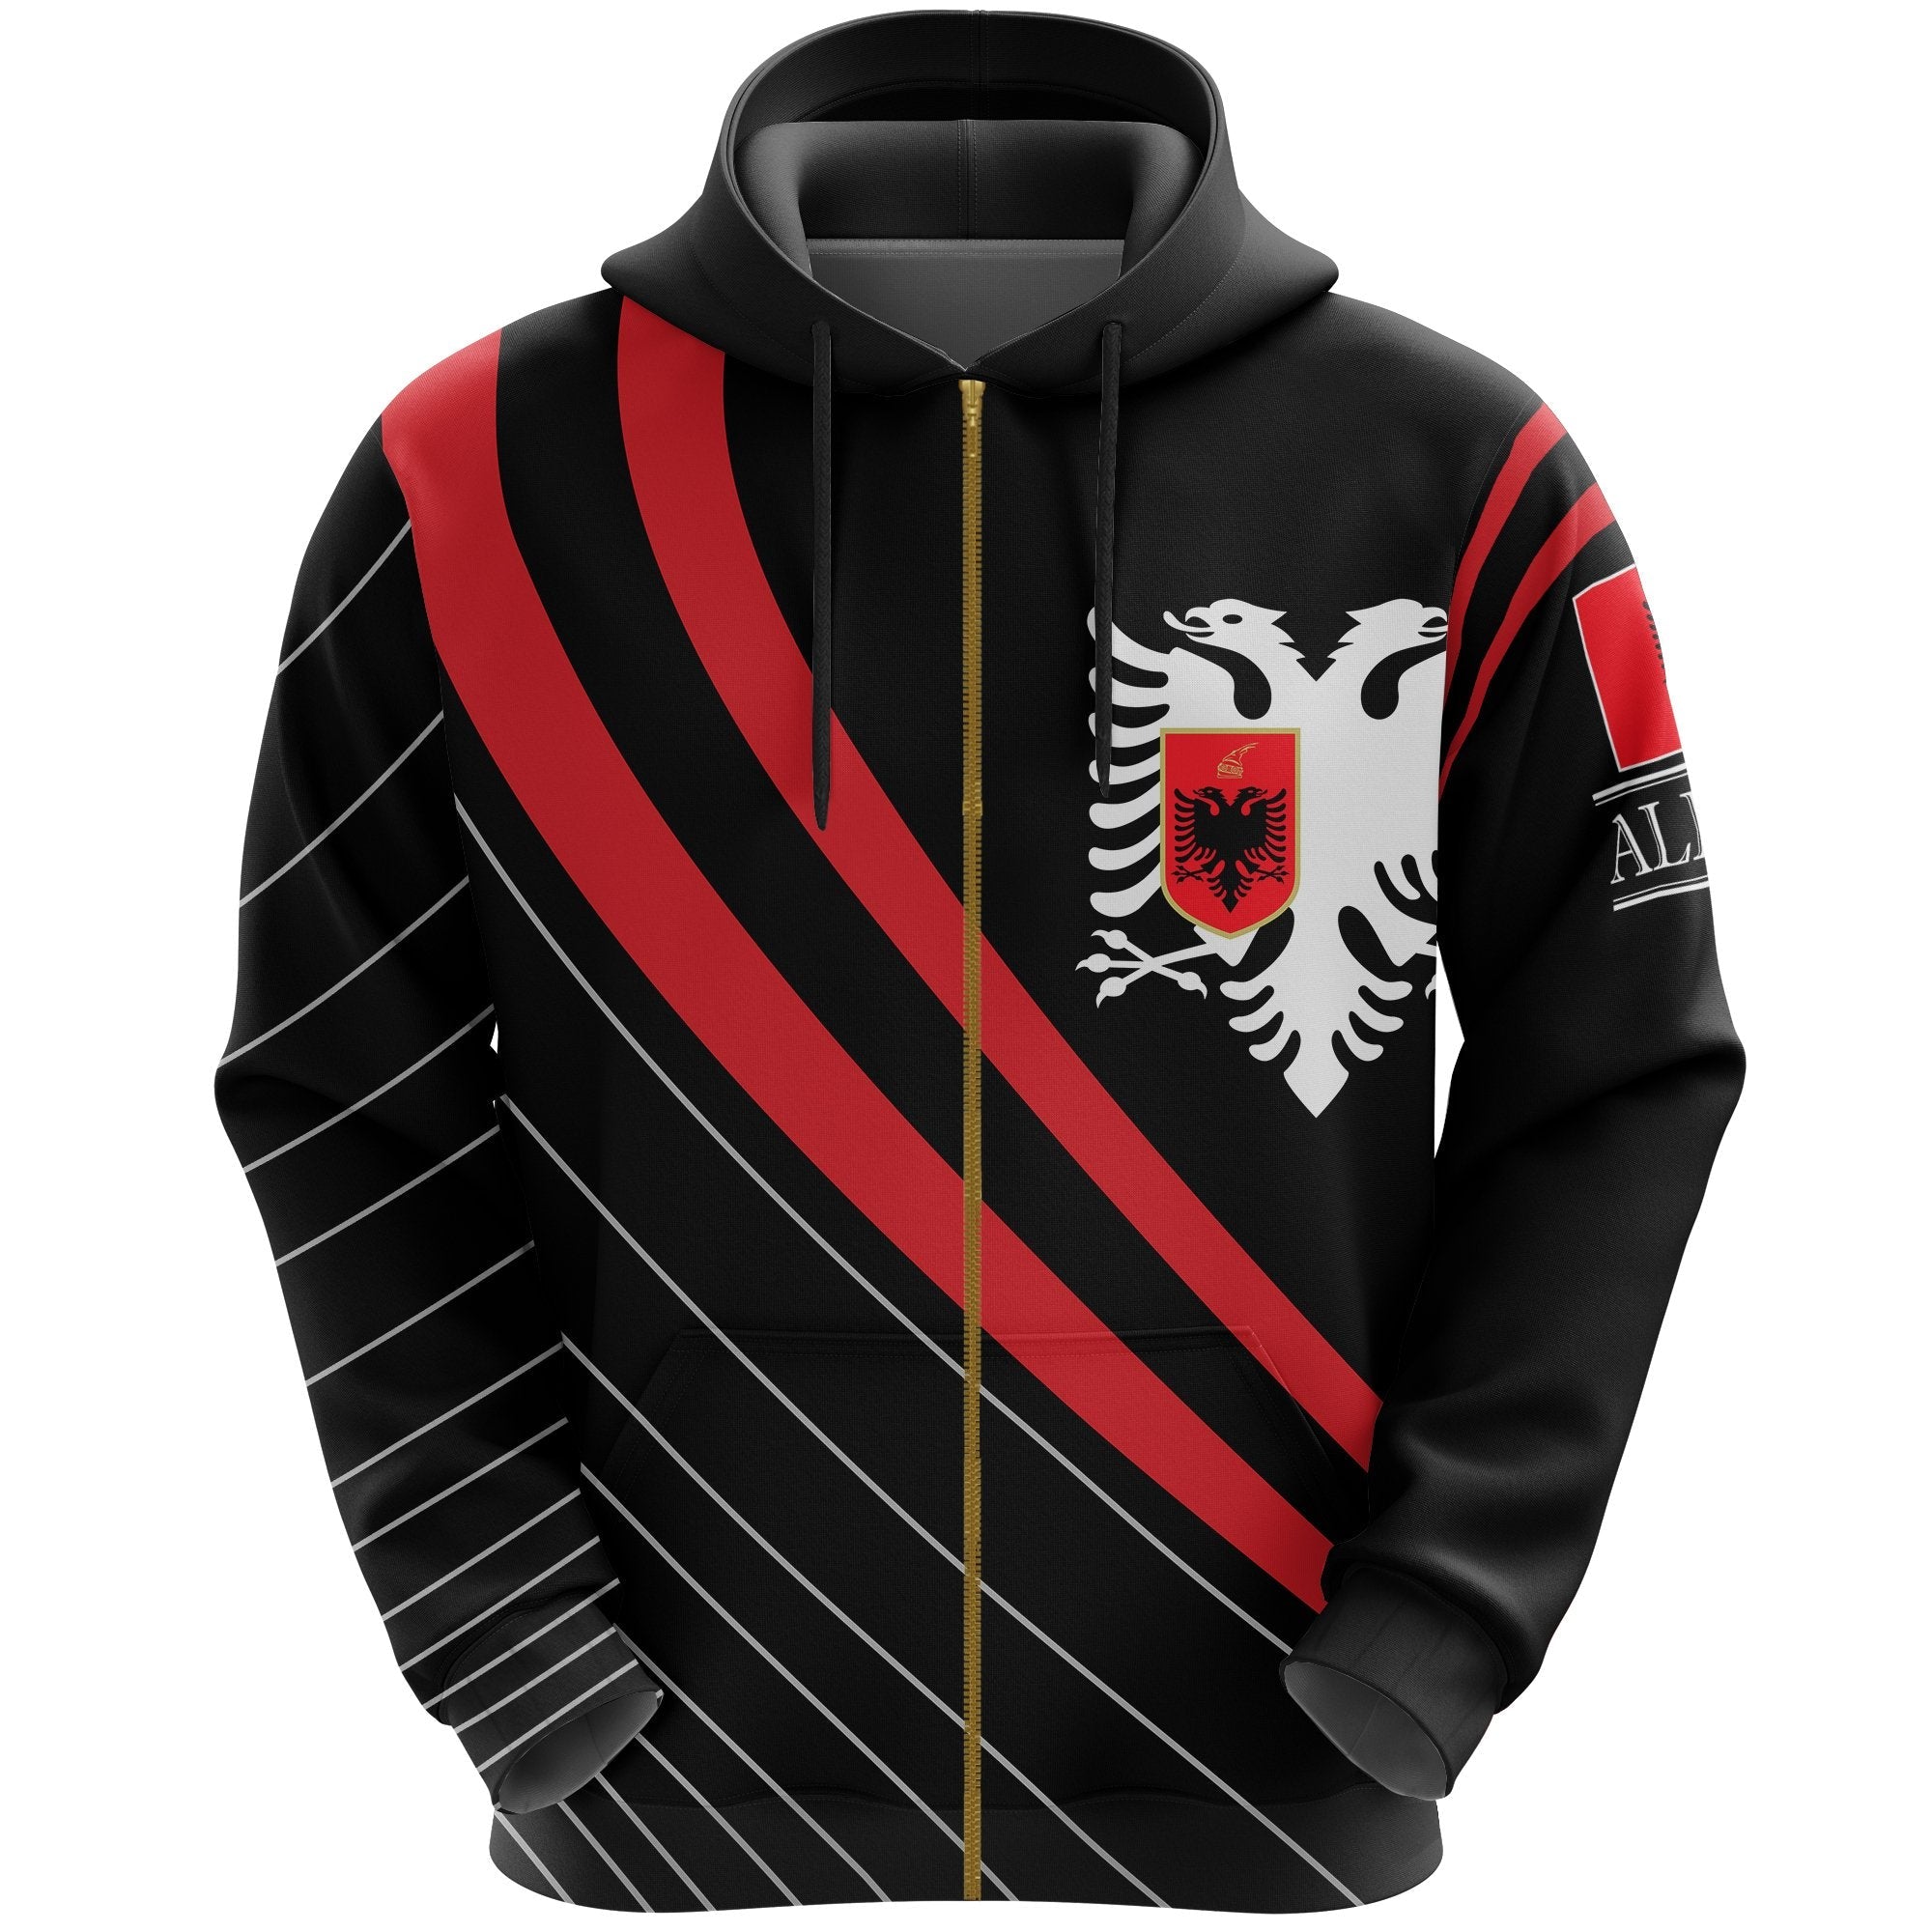 albania-zip-hoodie-albanian-style-of-pride